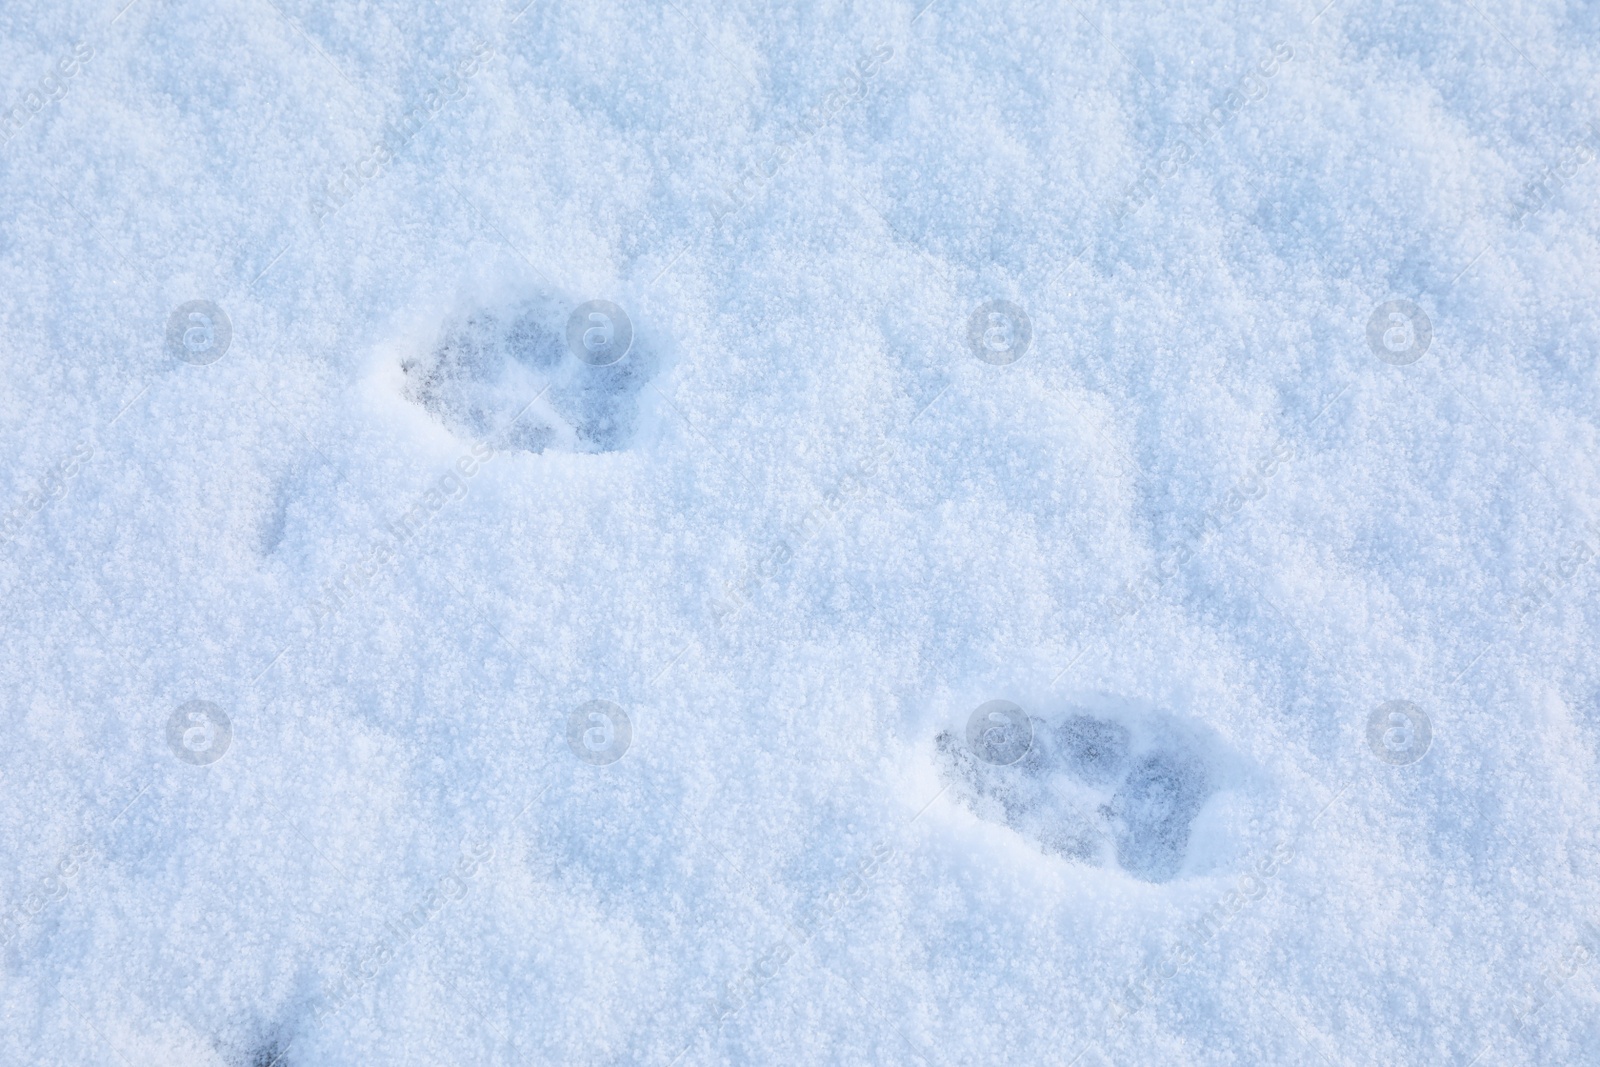 Photo of Animal trails on snow outdoors. Winter season